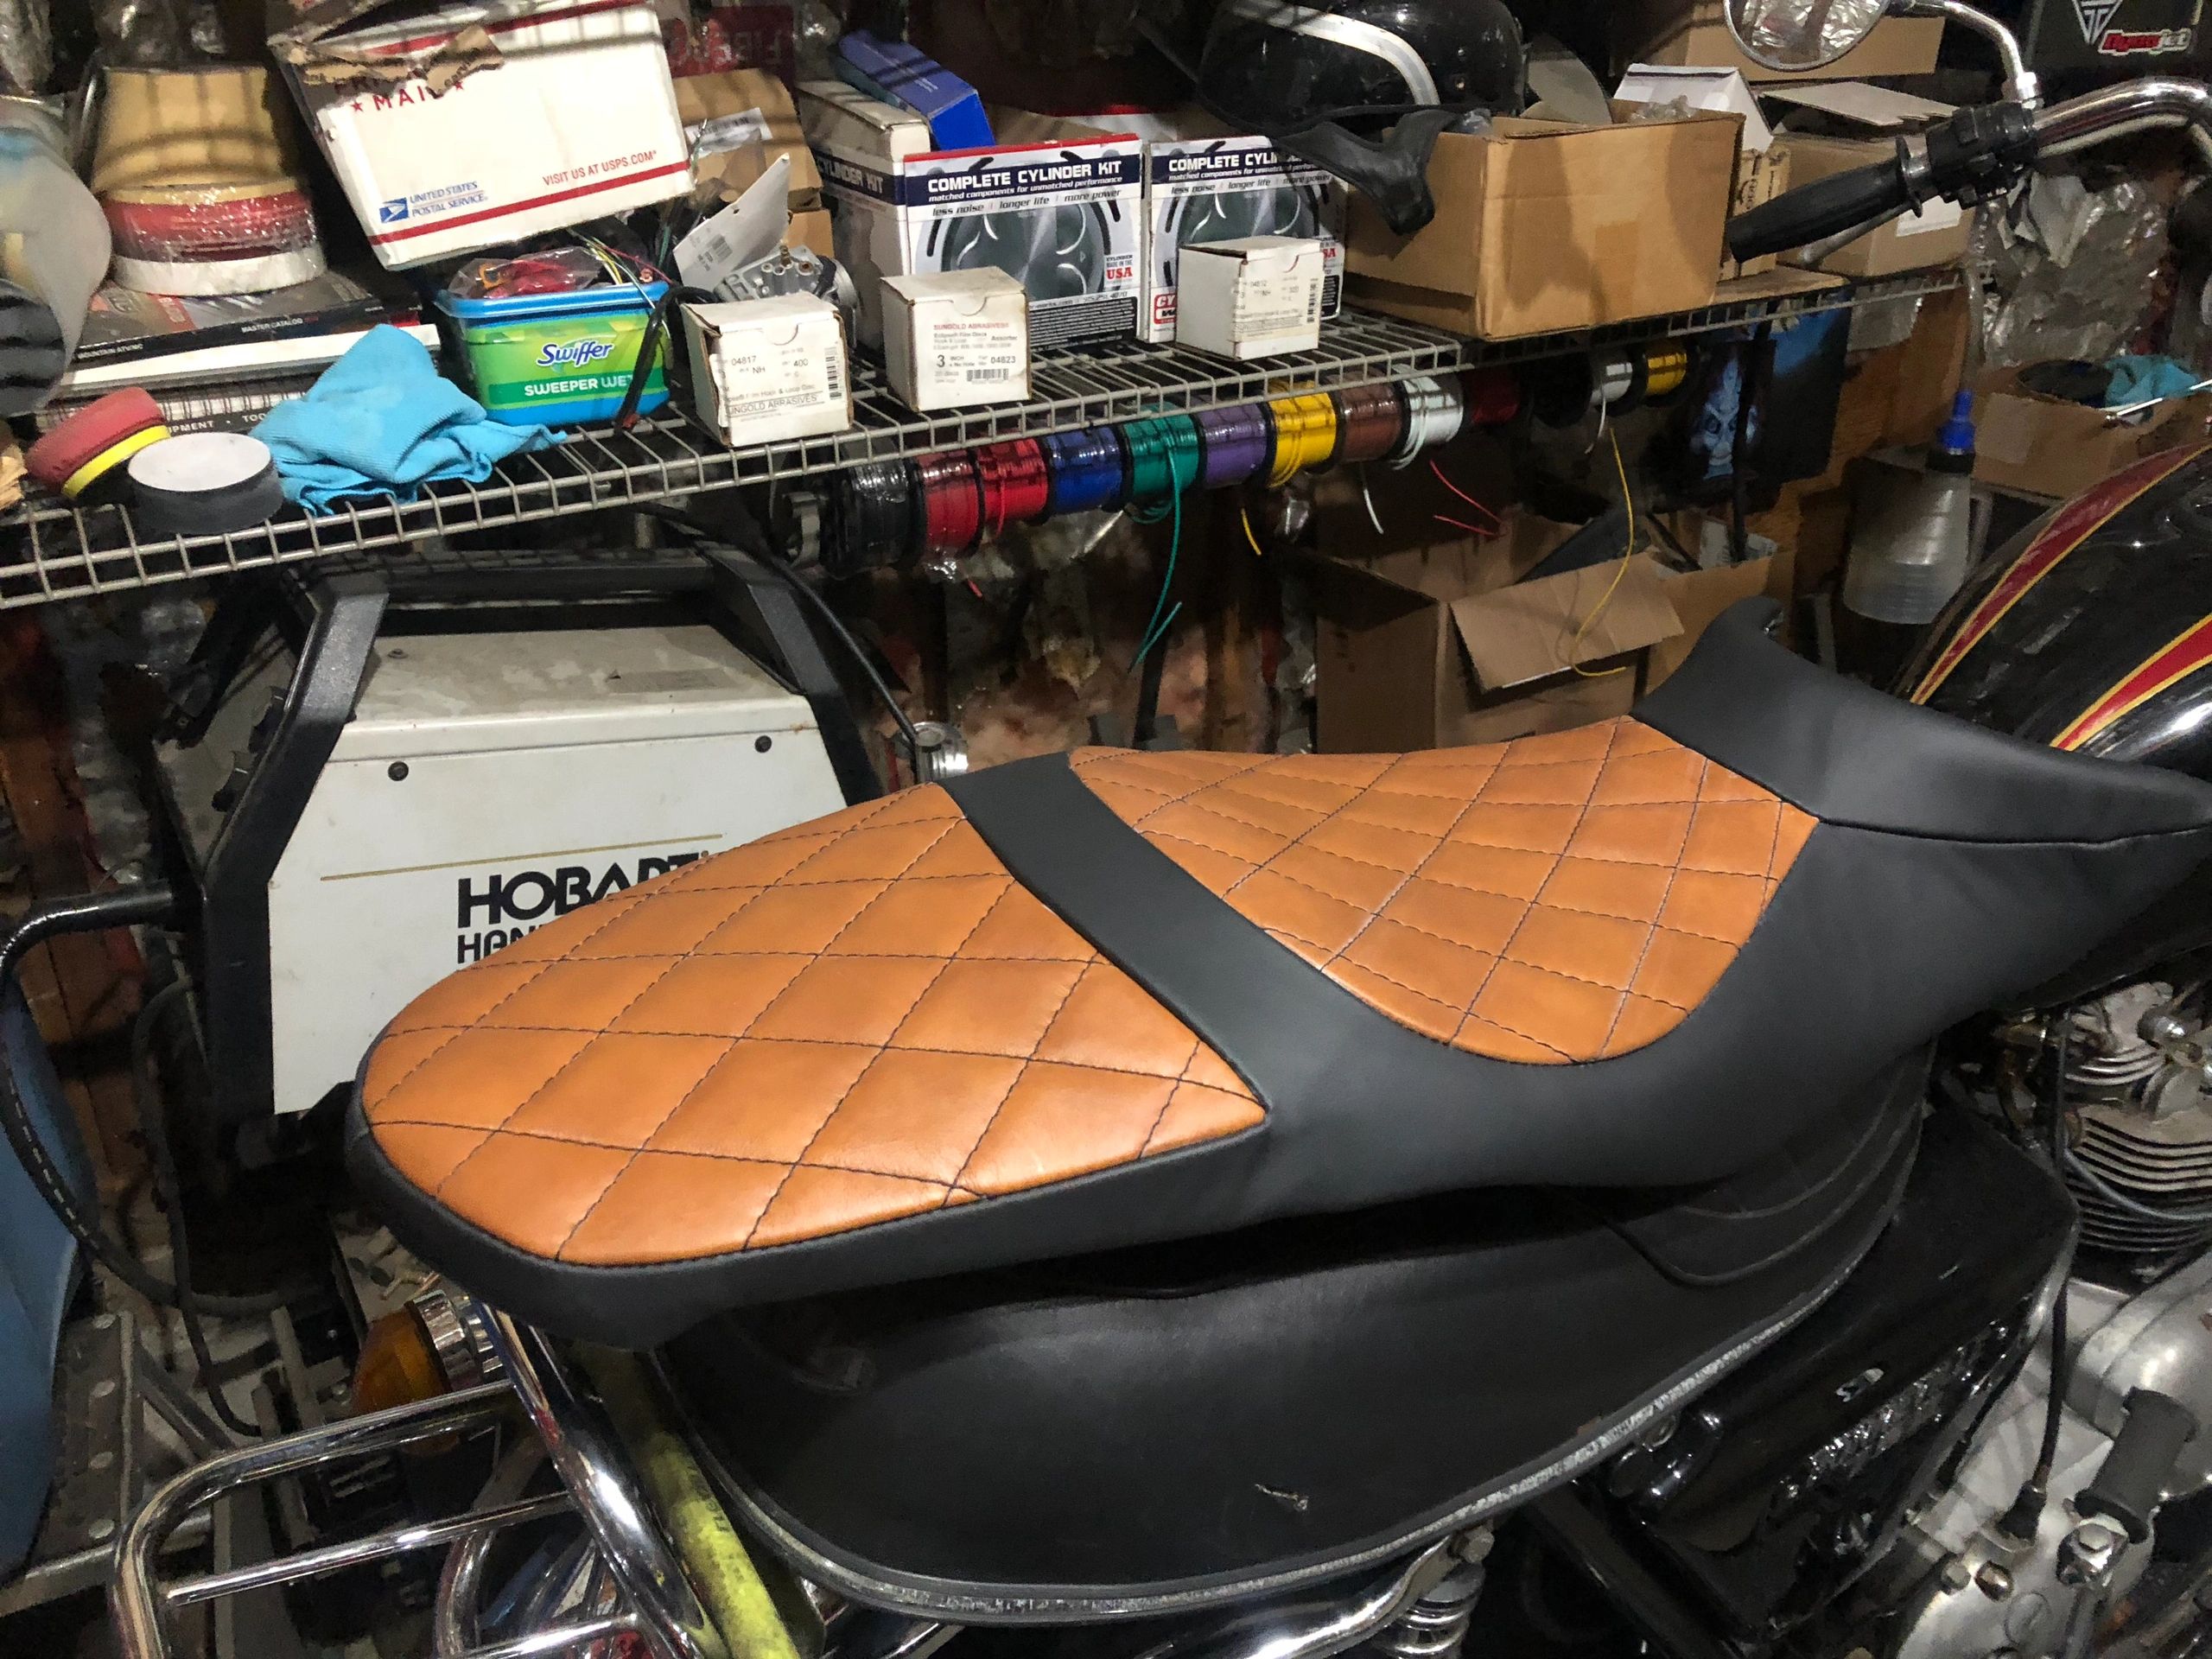 custom motorcycle seats
leather motorcycle seats
motorcycle repair
motorcycle restoration
